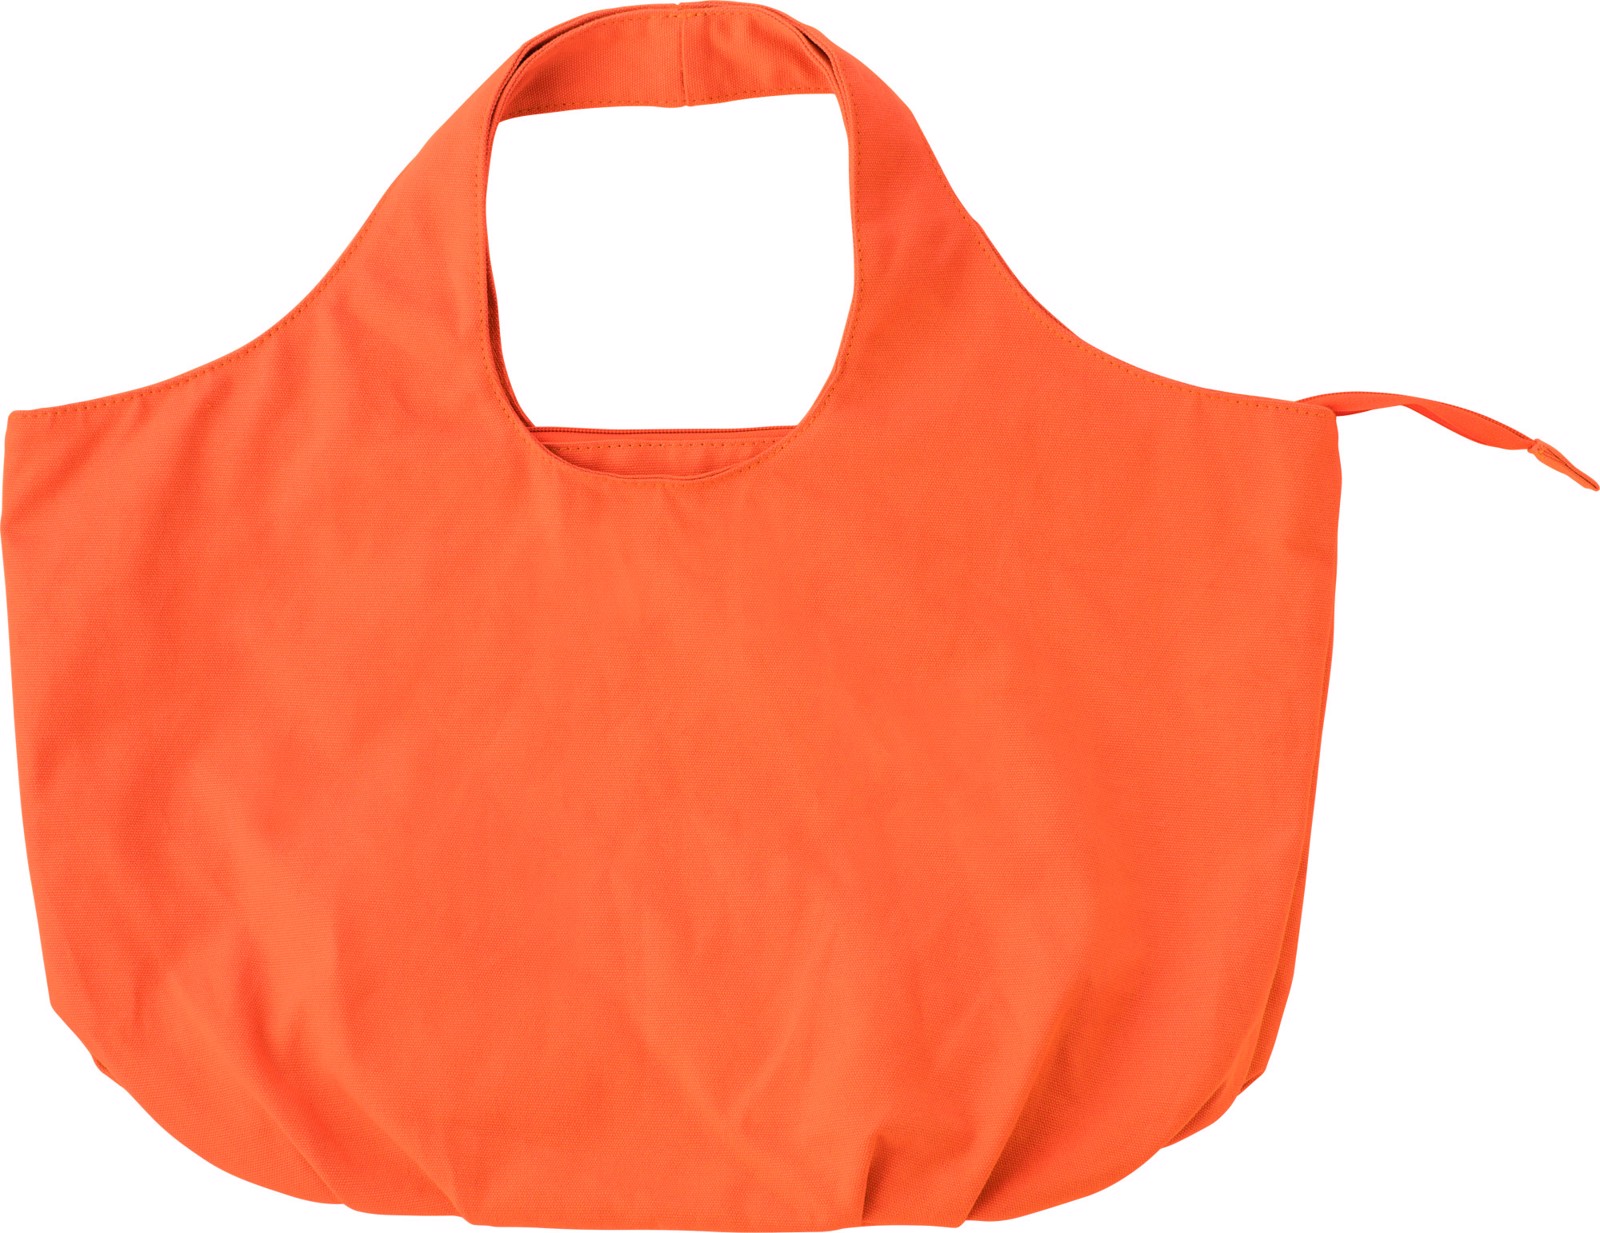 Cotton beach bag, - Orange